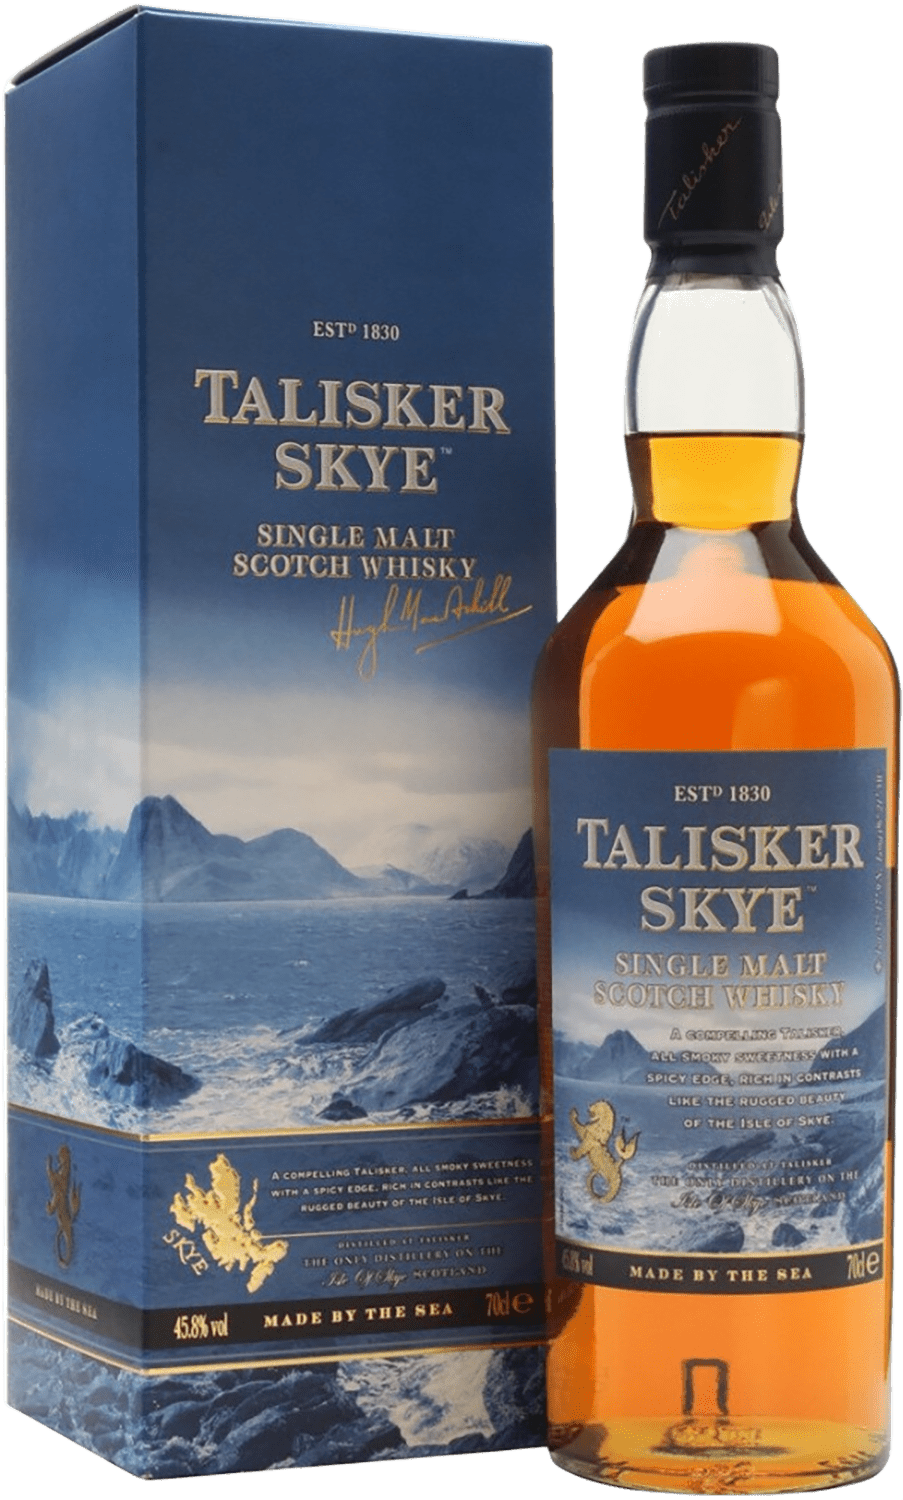 Talisker Skye Single Malt Scotch Whisky (gift box) glenfarclas 185th anniversary single malt scotch whisky gift box